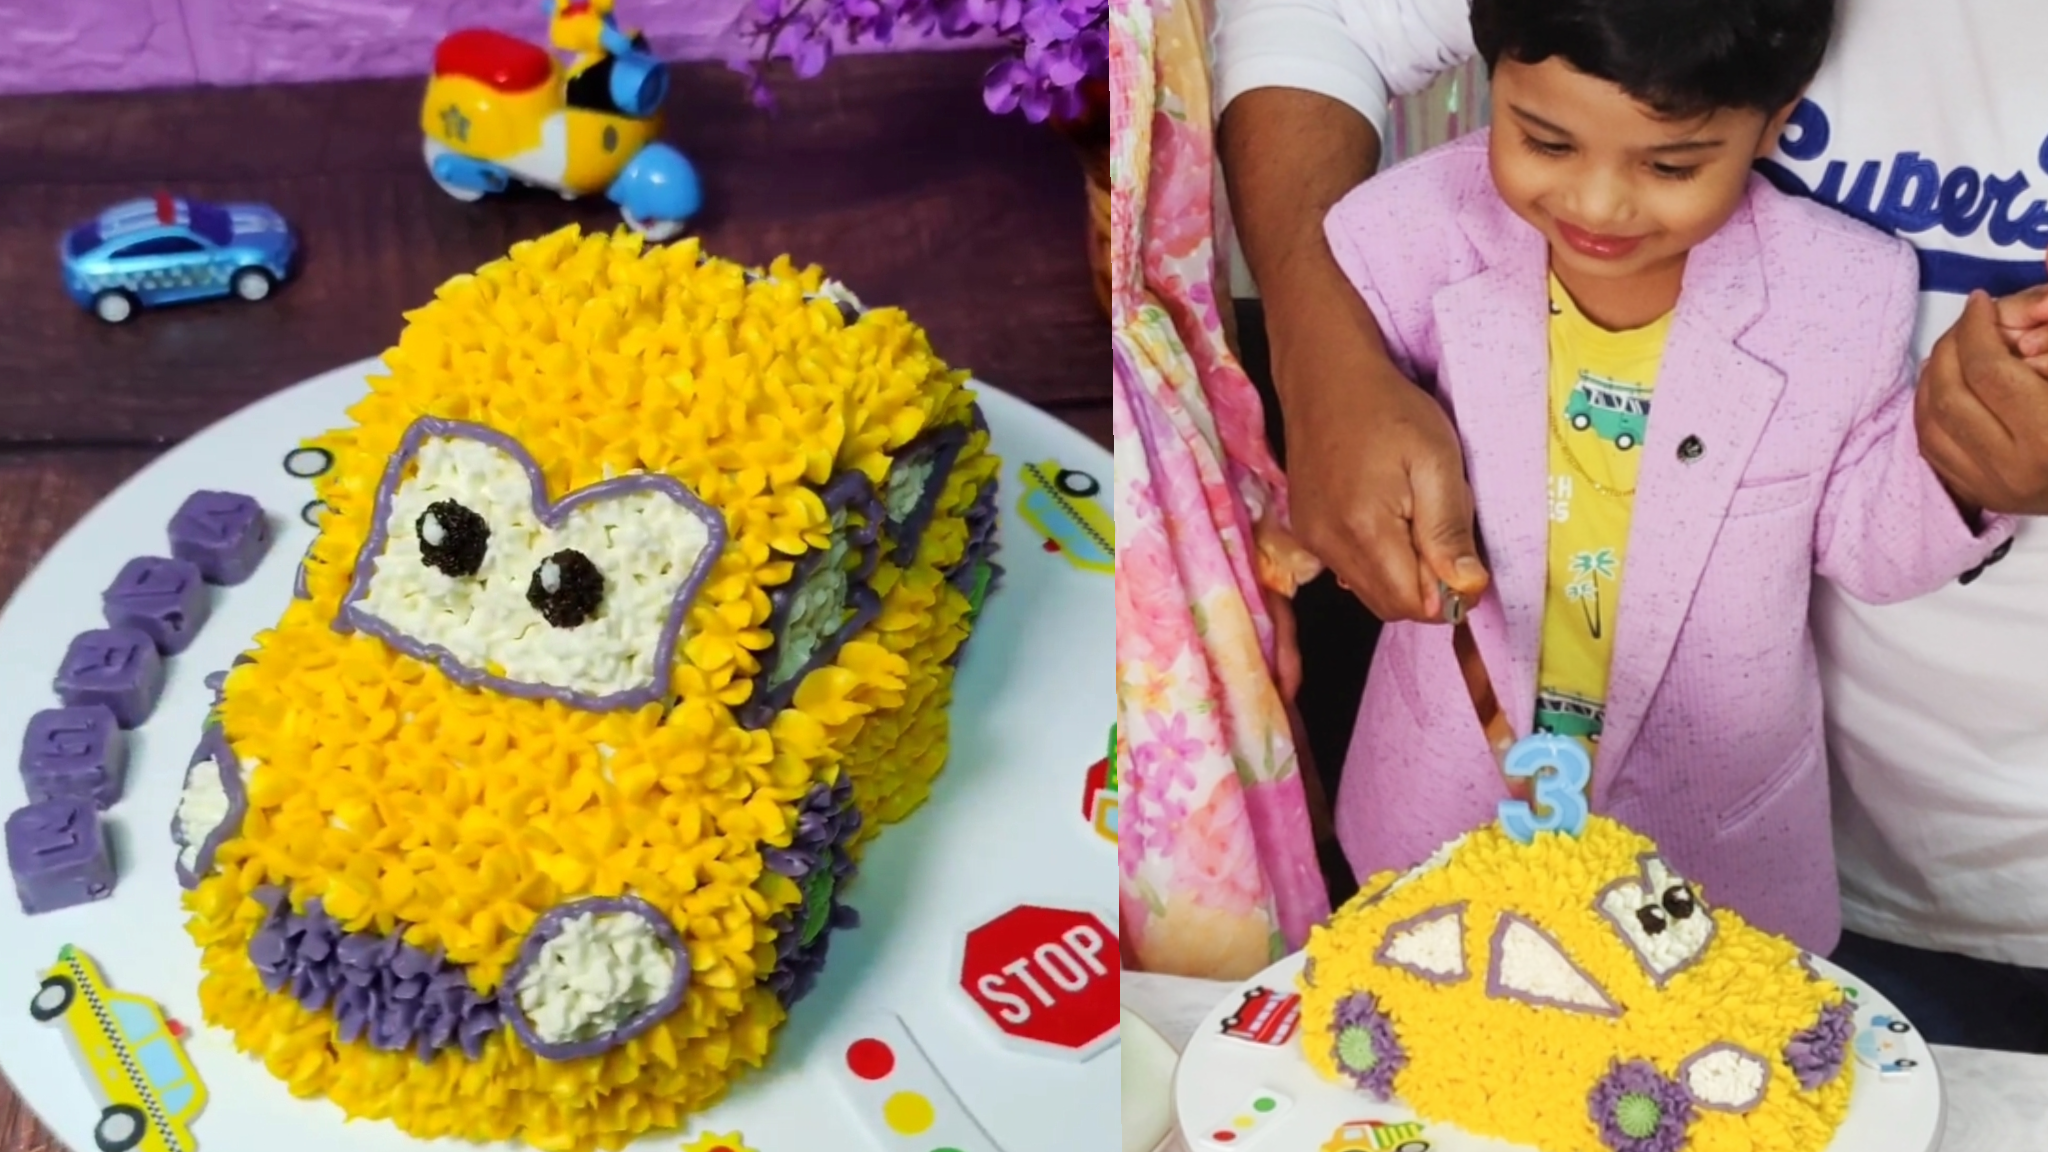 Order Custom 3D Kids Birthday Cakes Online - Deliciae